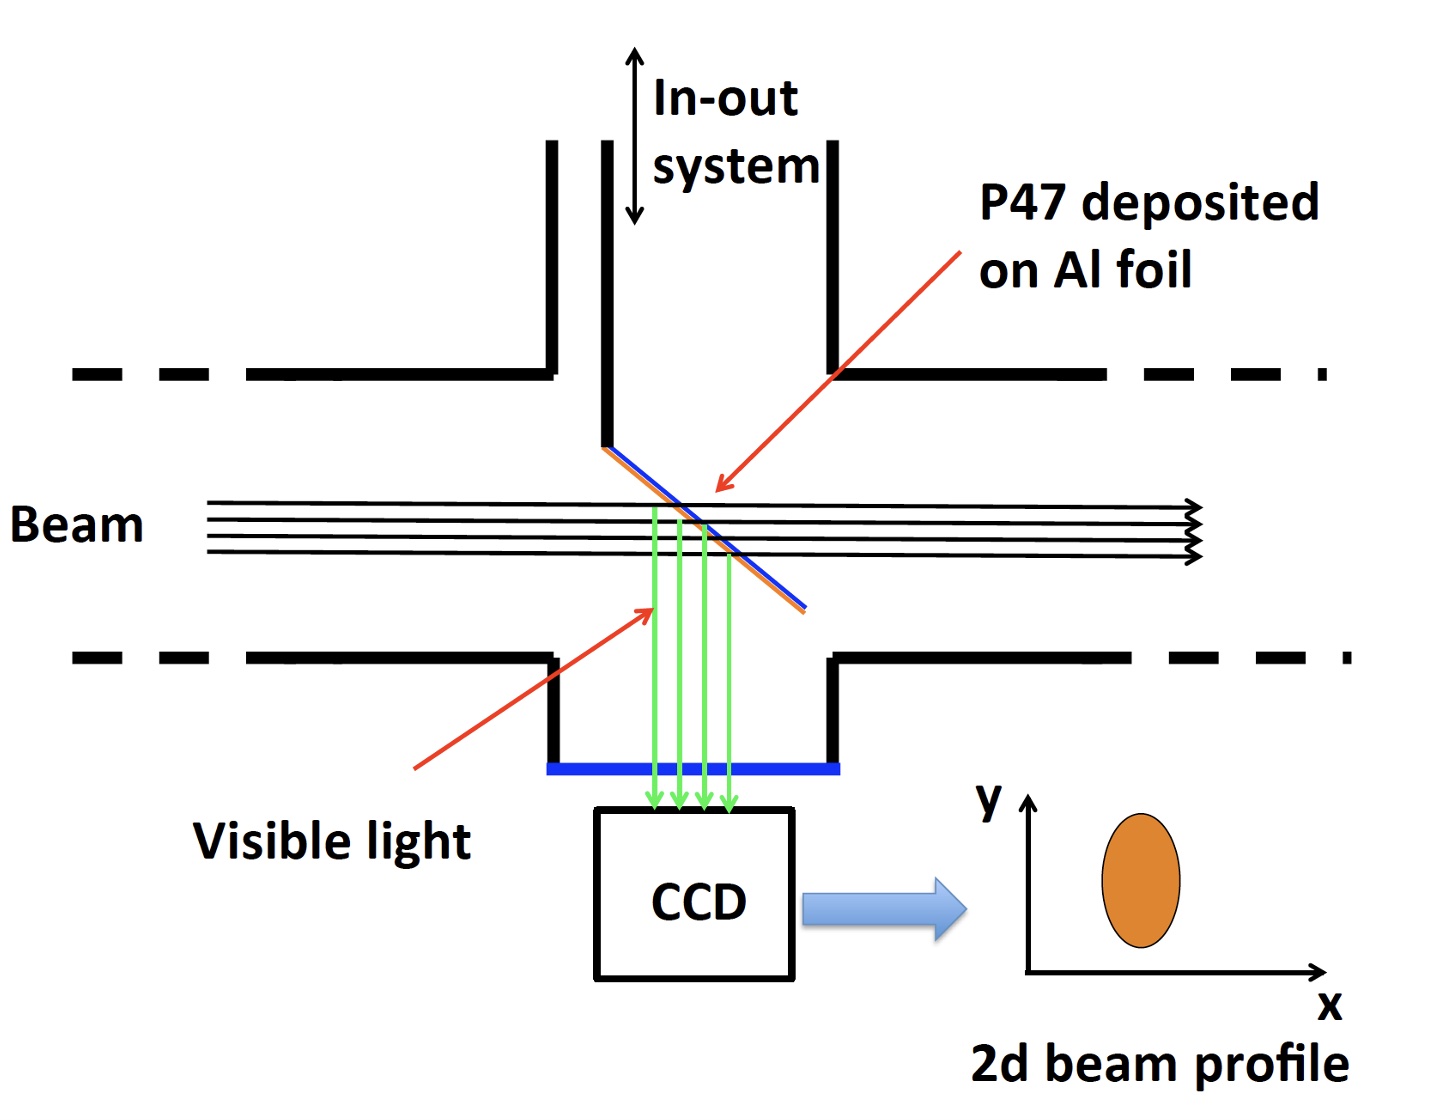 Pi2 beam monitoring detector operation scheme